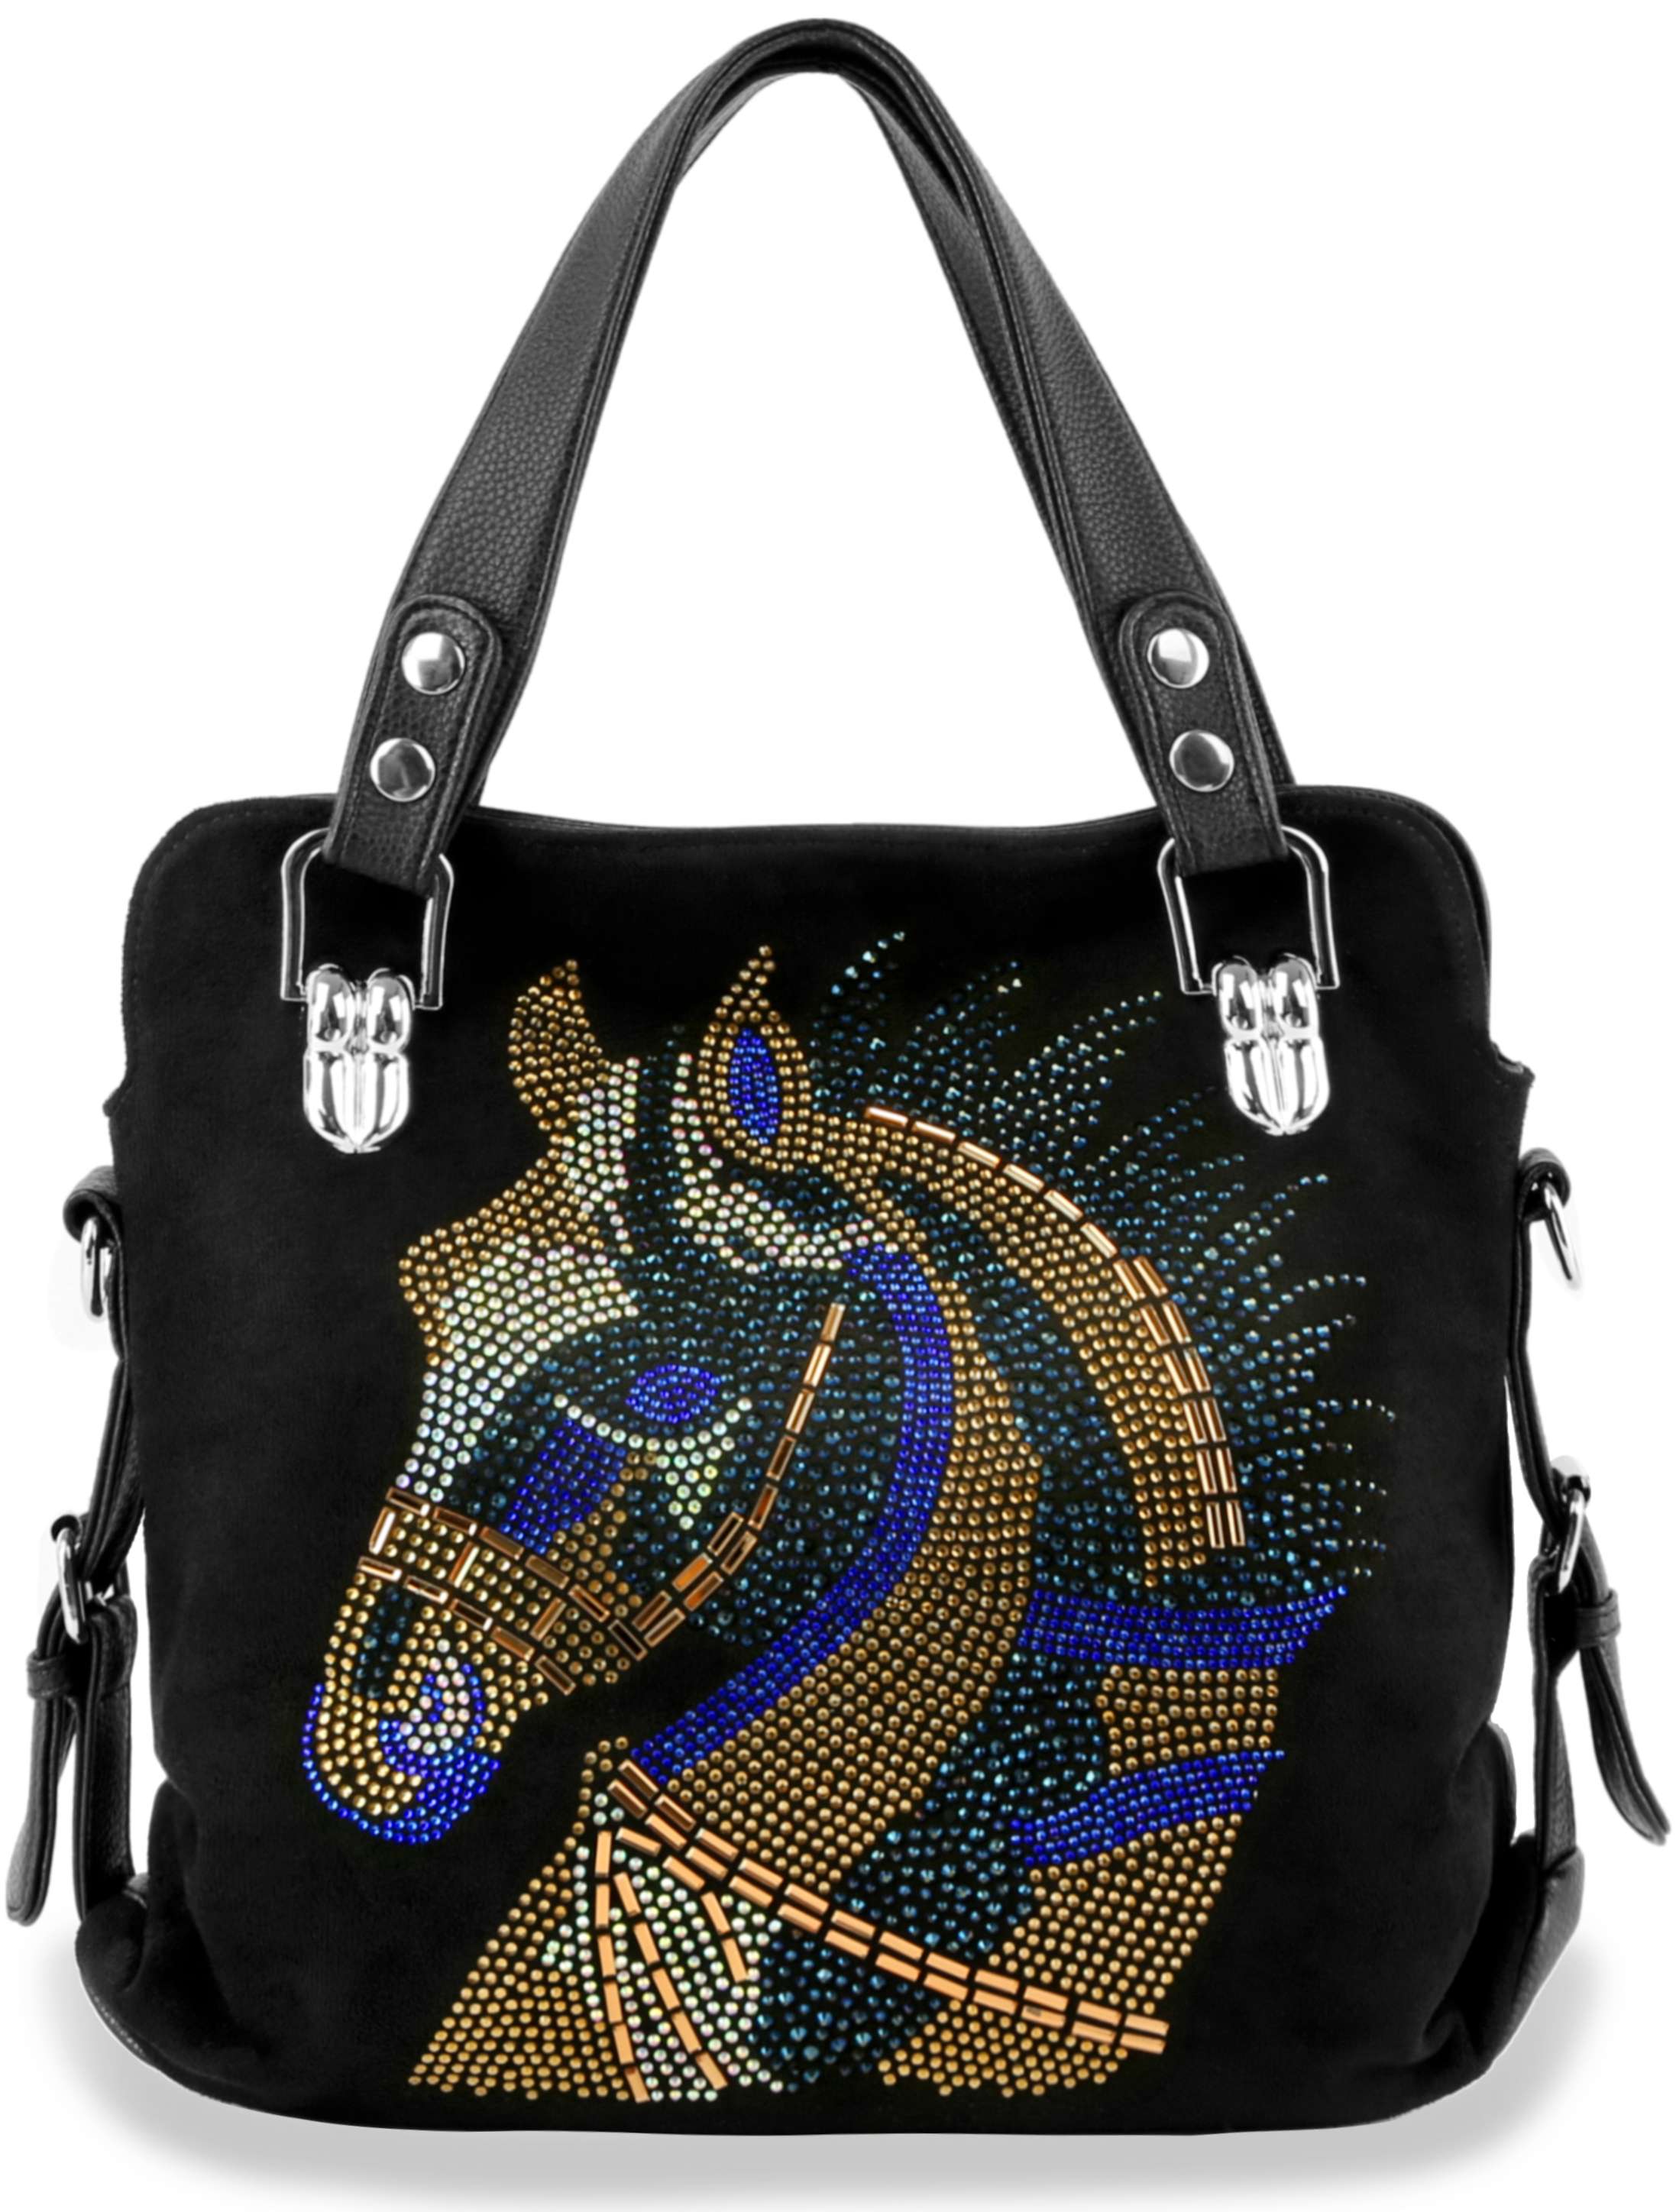 Horse Design Rhinestone Covered Handbag - Black